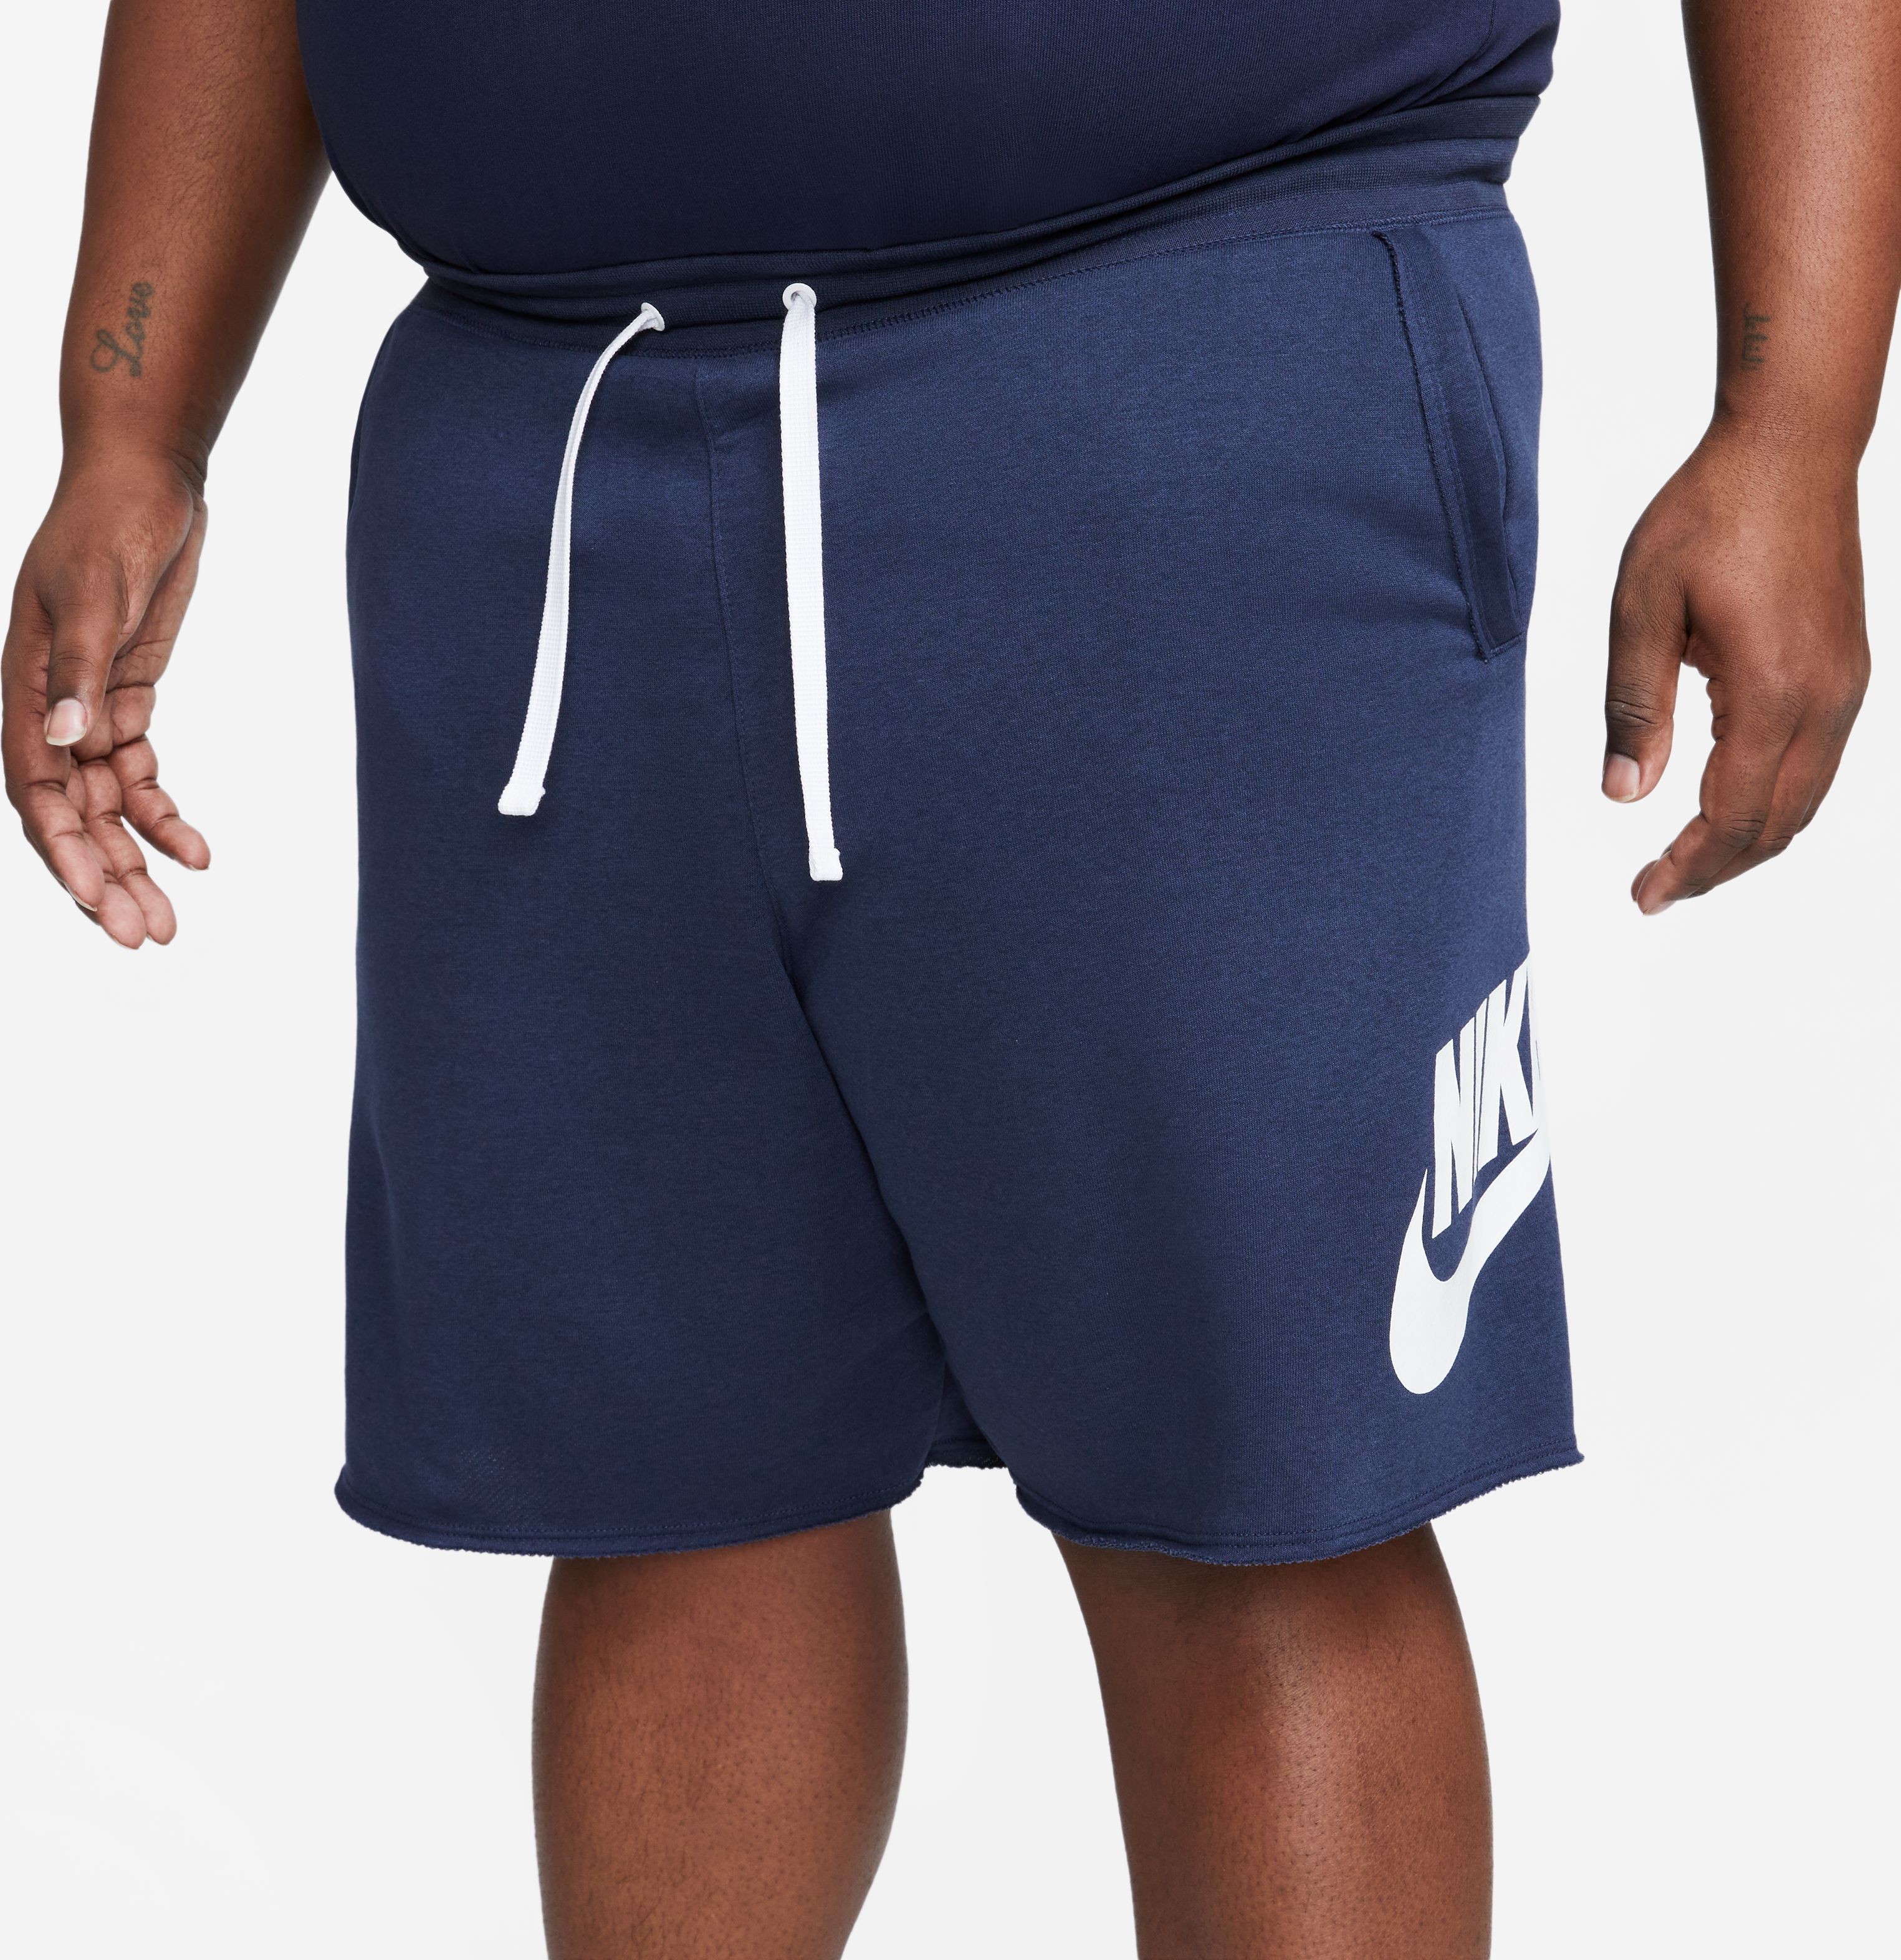 hombre Nike M Pantaloneta Alumni azul Short Ft prochampions - Referencia Club lifestyle Nk Hbr de DX0502-410 :